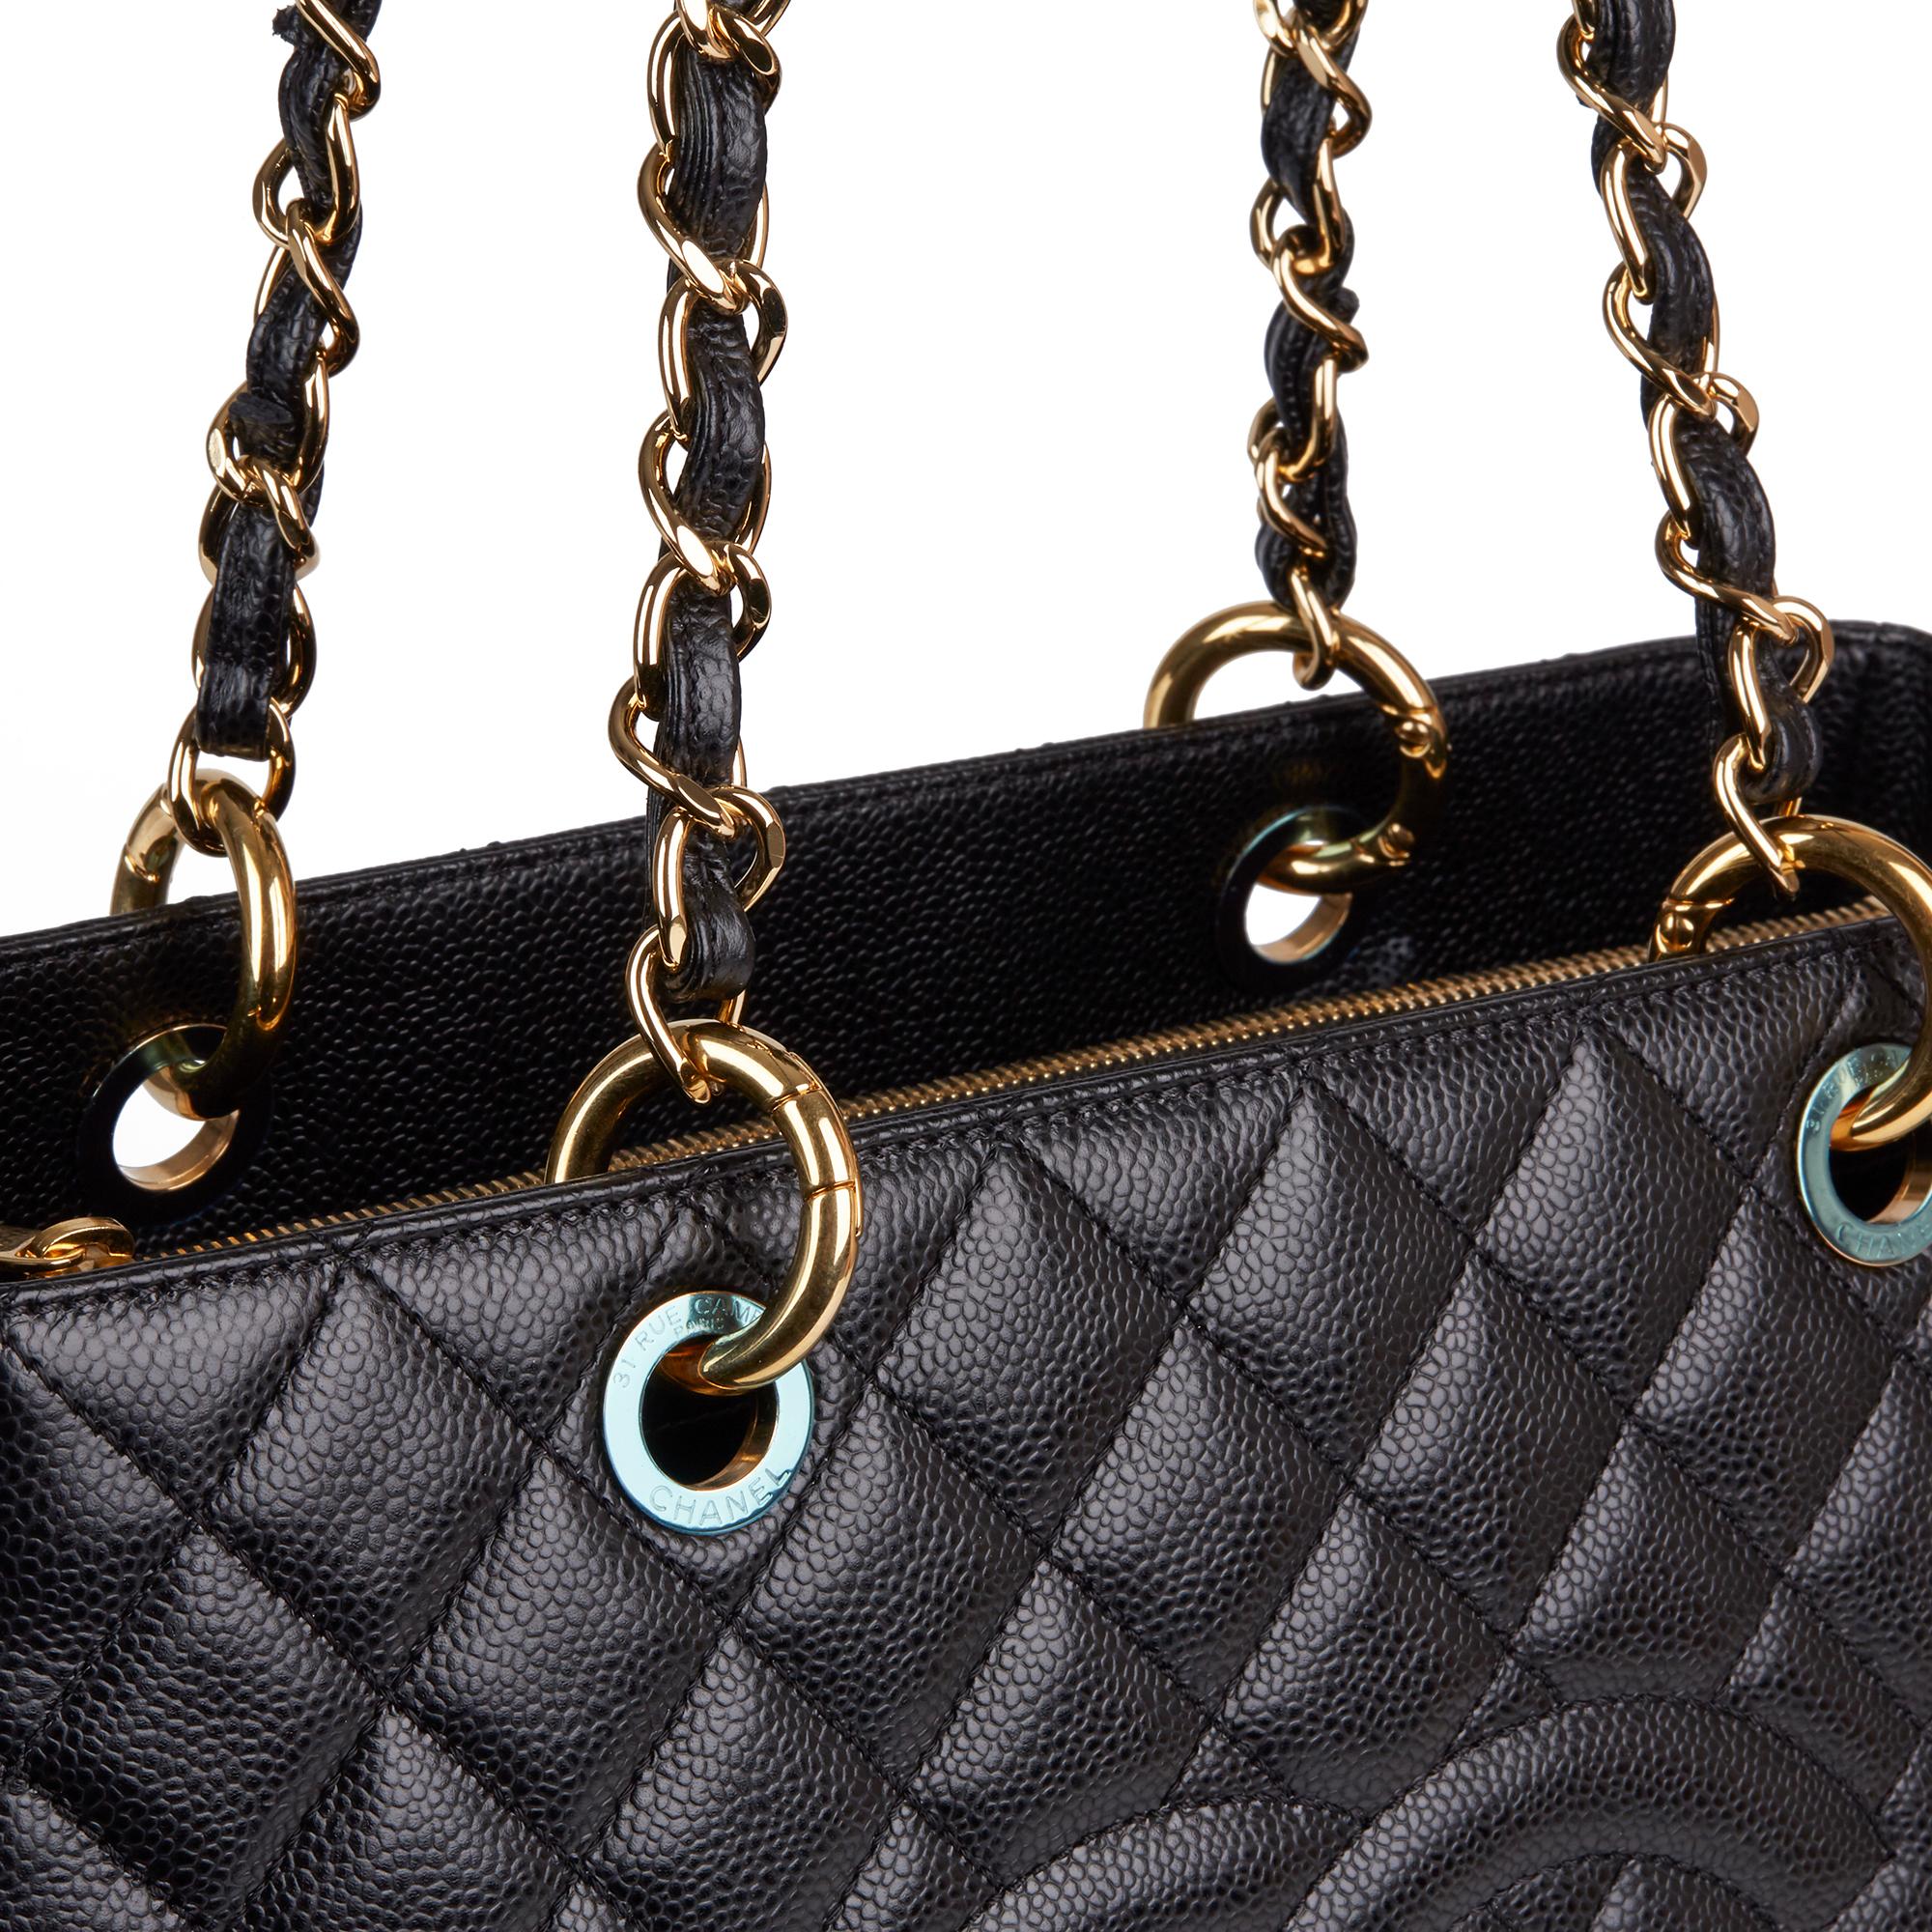 2014 Chanel Black Caviar Leather Grand Shopping Tote GST 1